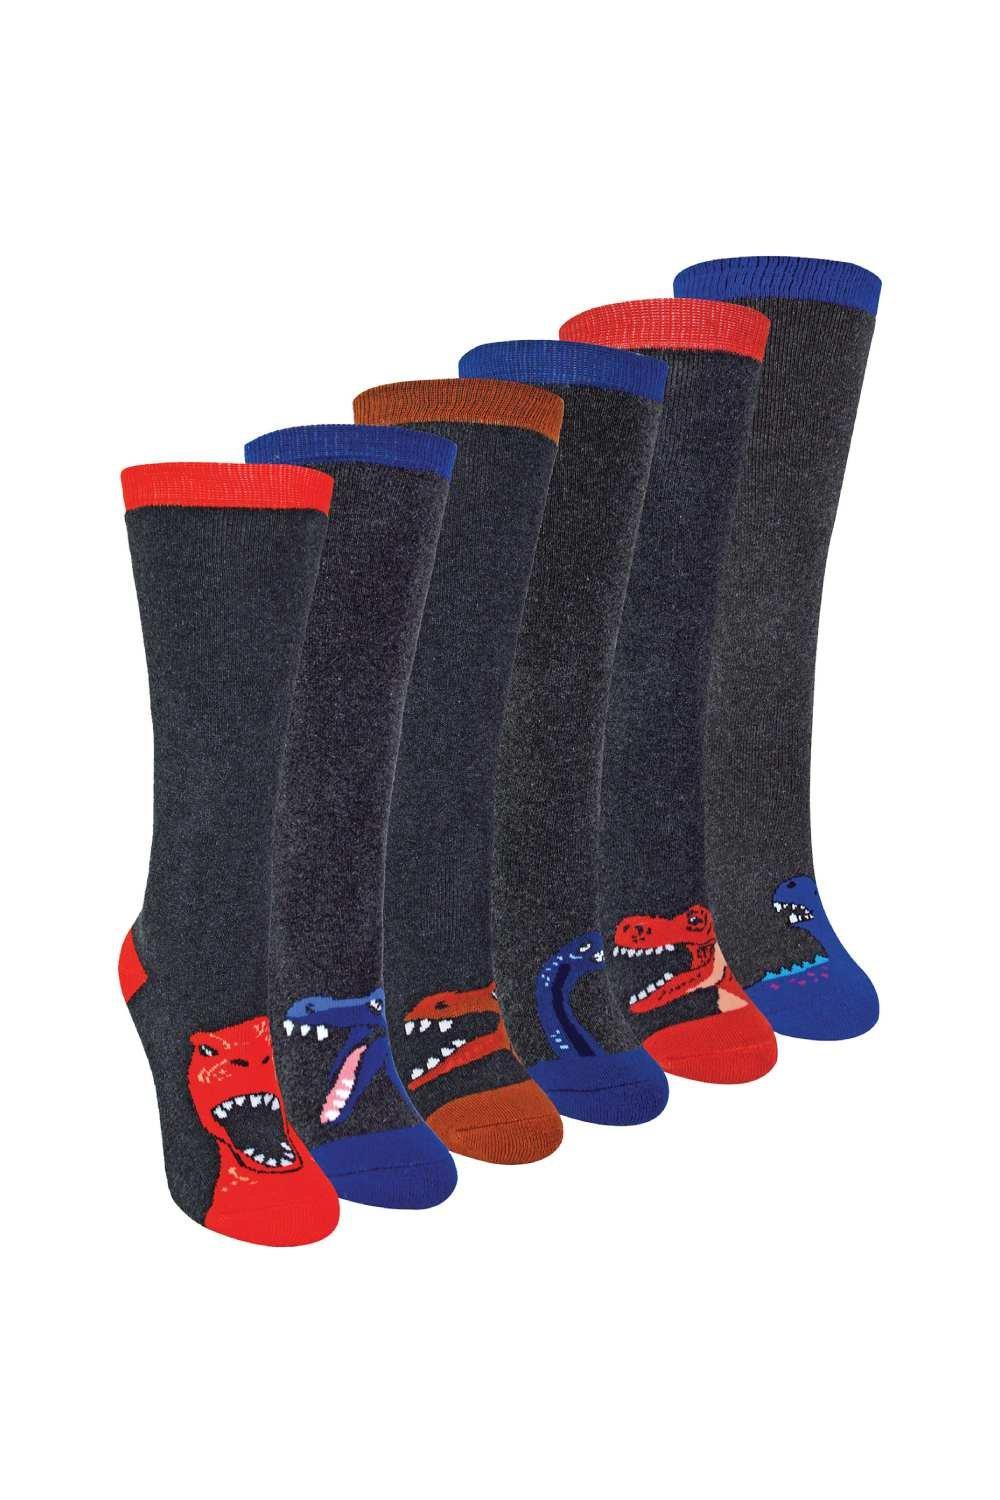 6 Pairs Multipack Wellington Boot Socks